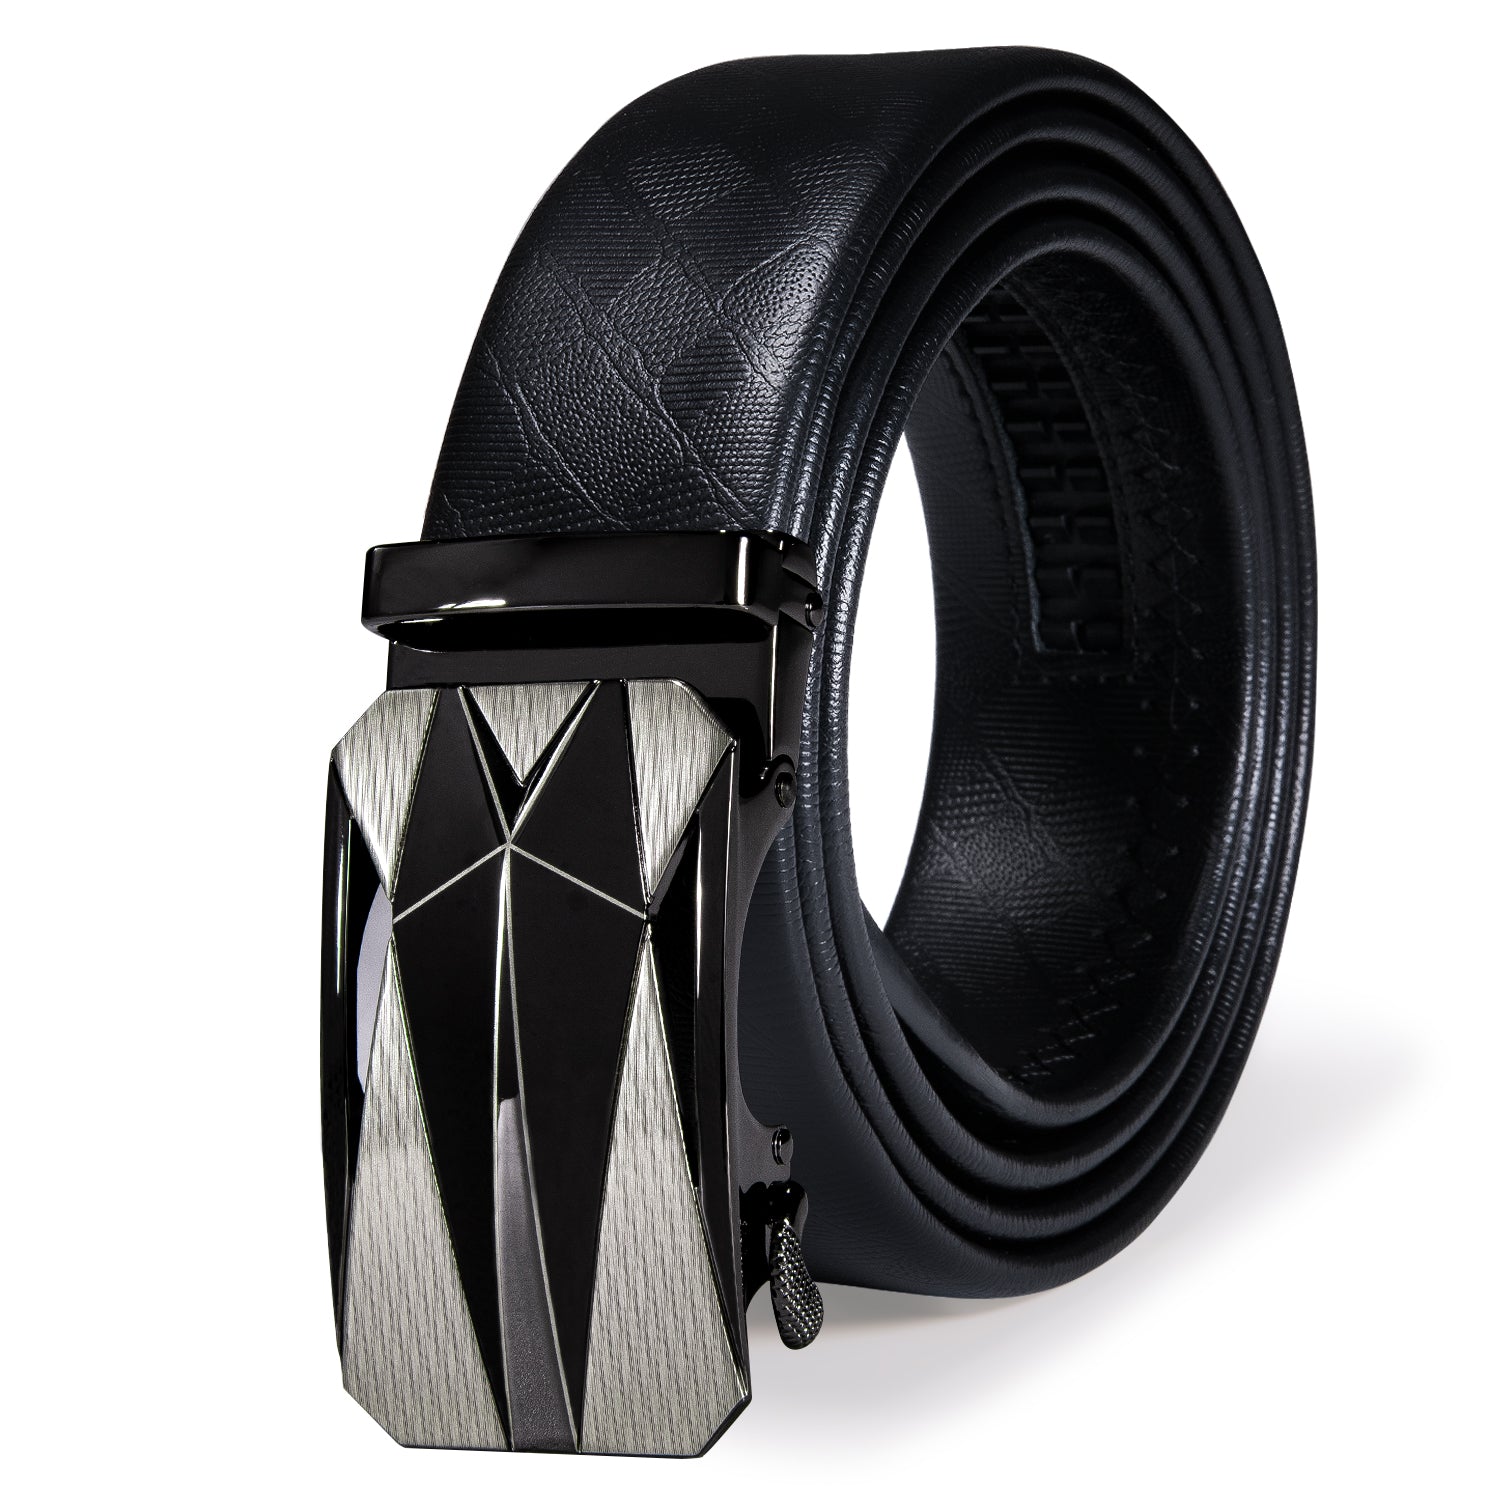 New Gold Watch Design Genuine Leather Belt